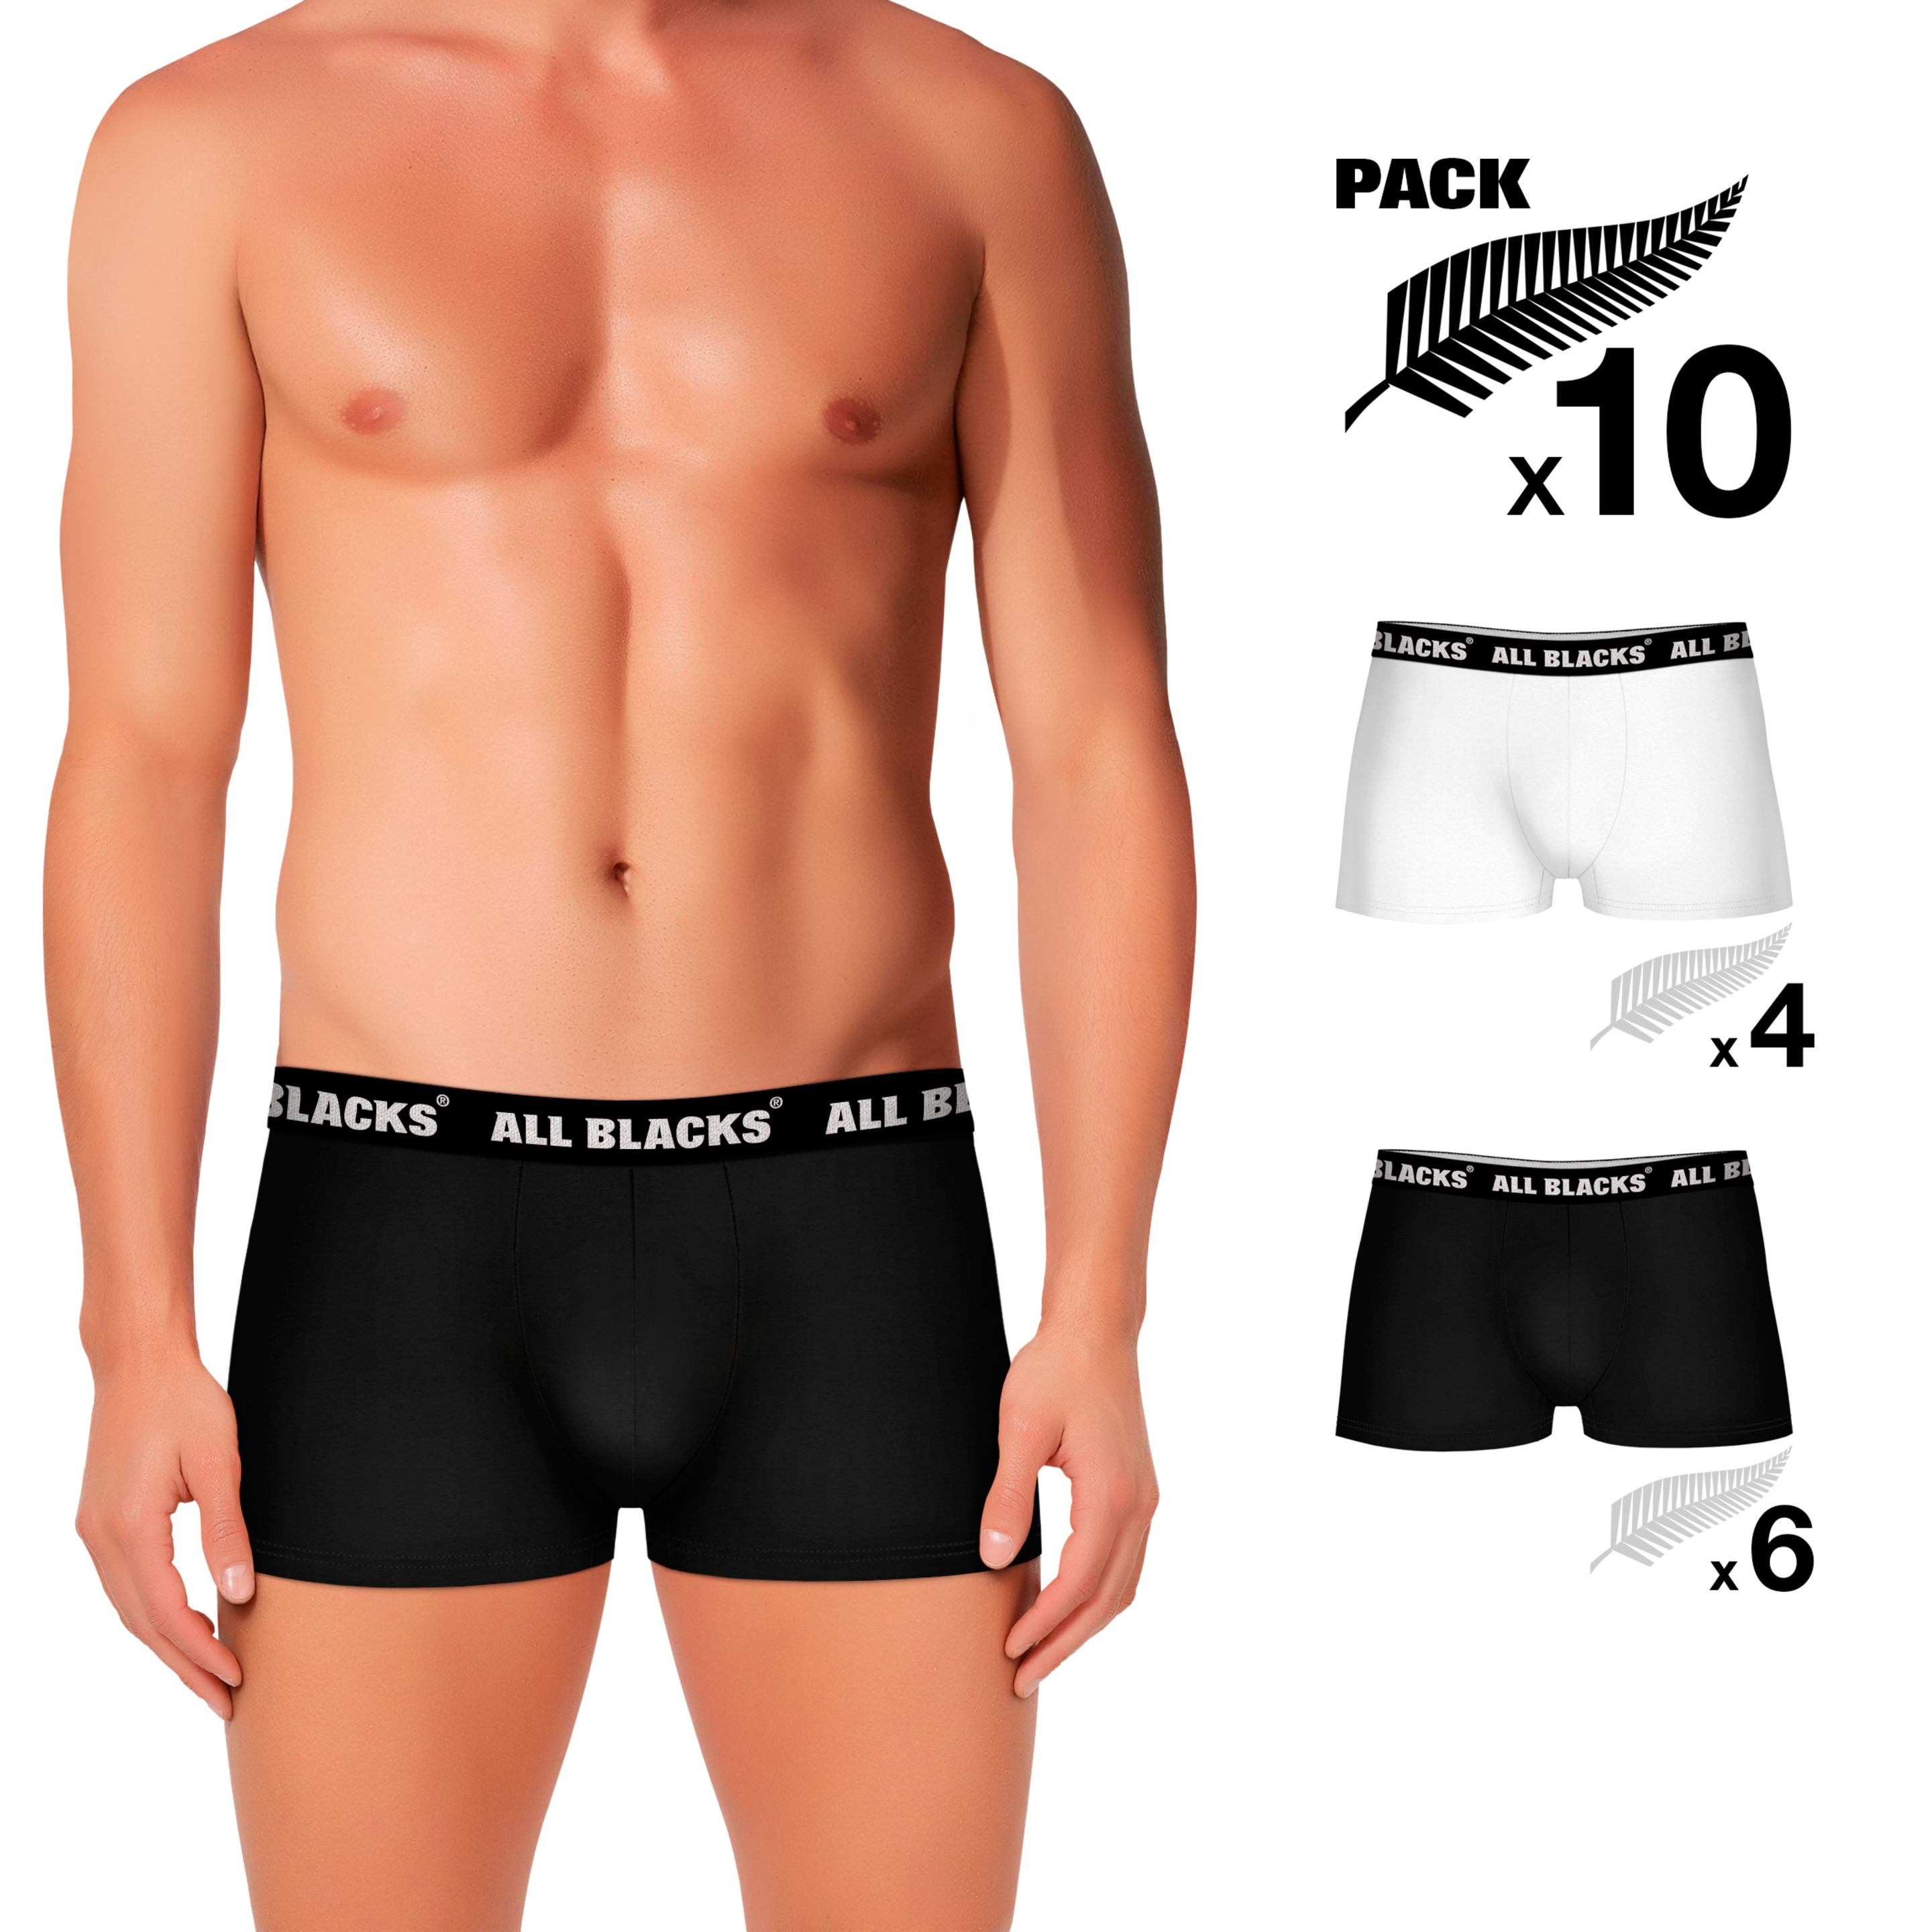 Calzoncillos Boxer All Blacks (Pack 10)